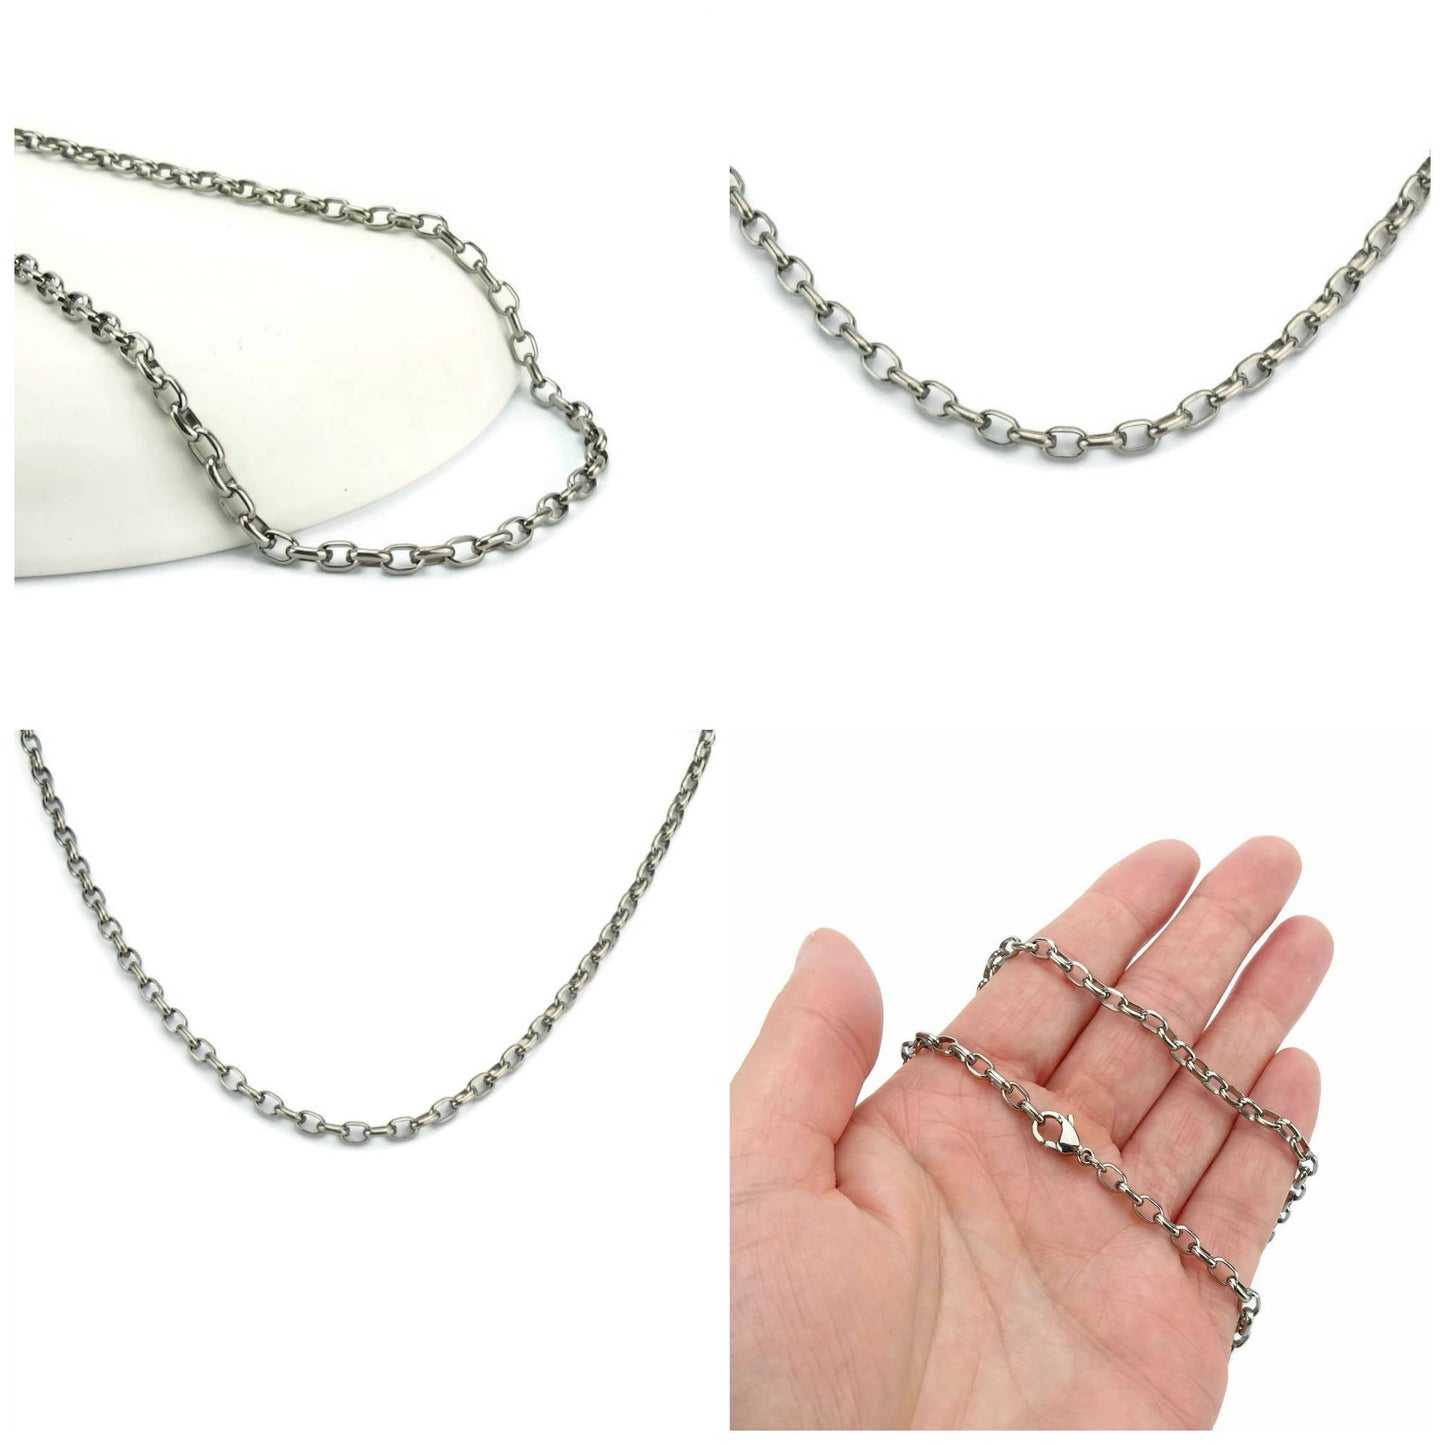 Mens Titanium Necklace, Half Round Oval Titanium 4 mm wide Chain Necklace for Sensitive Skin, Nickel Free Pure Titanium Jewelry for Him